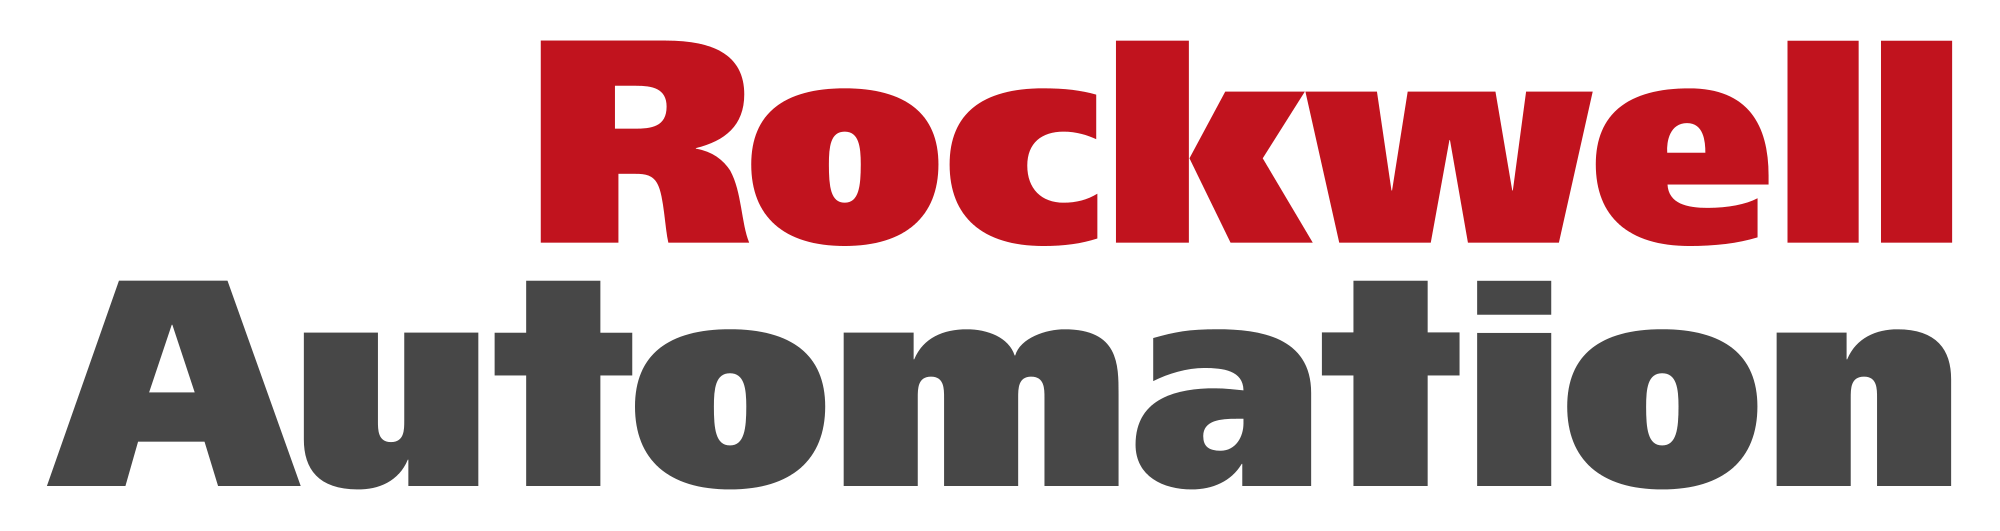 Rockwell Automation Logo - Rockwell Automation logo.svg